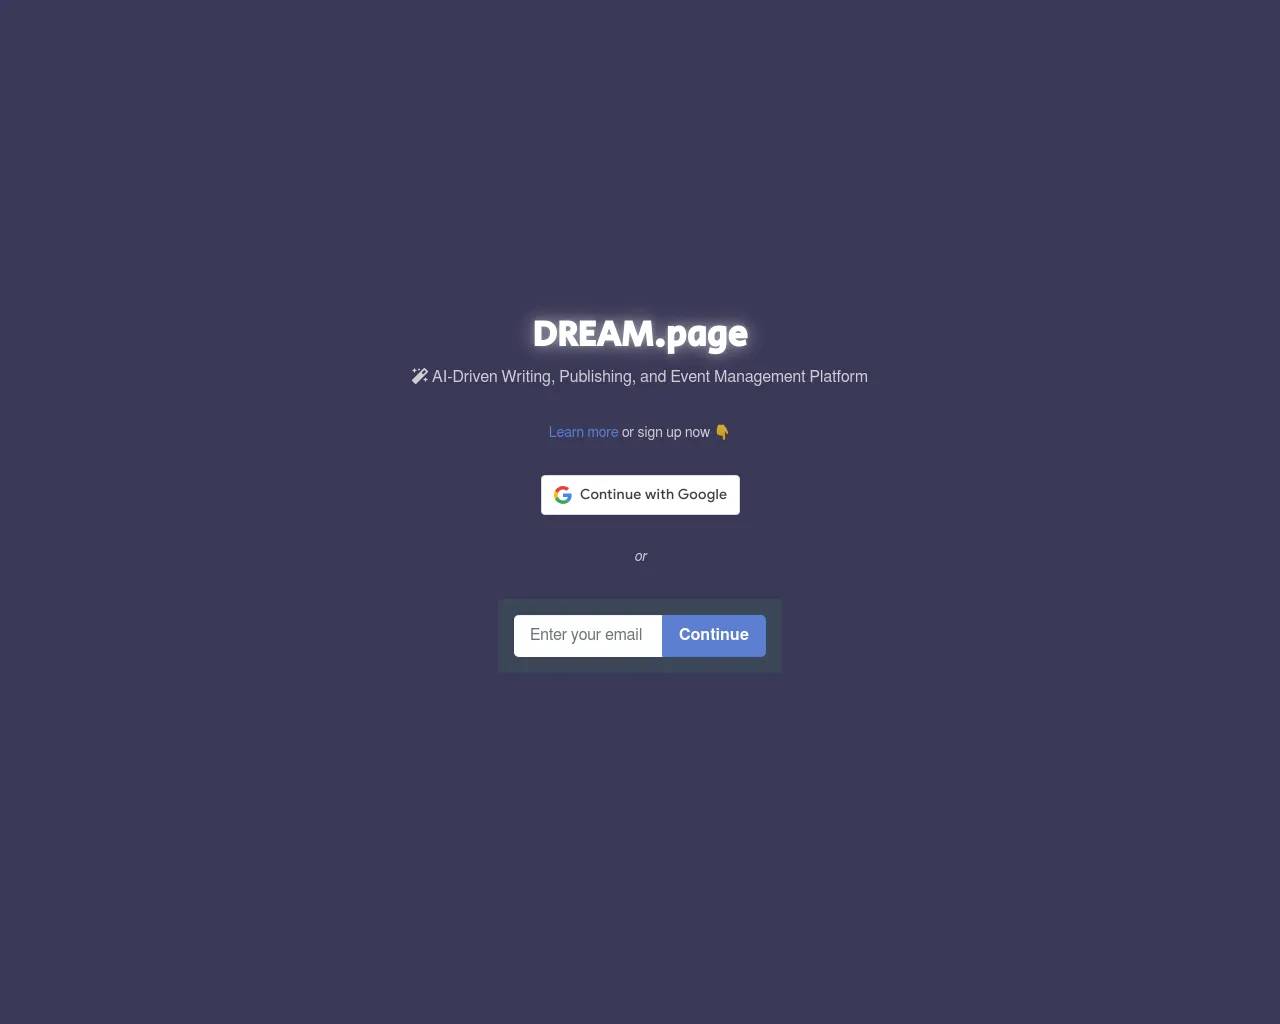 DREAM page screenshot